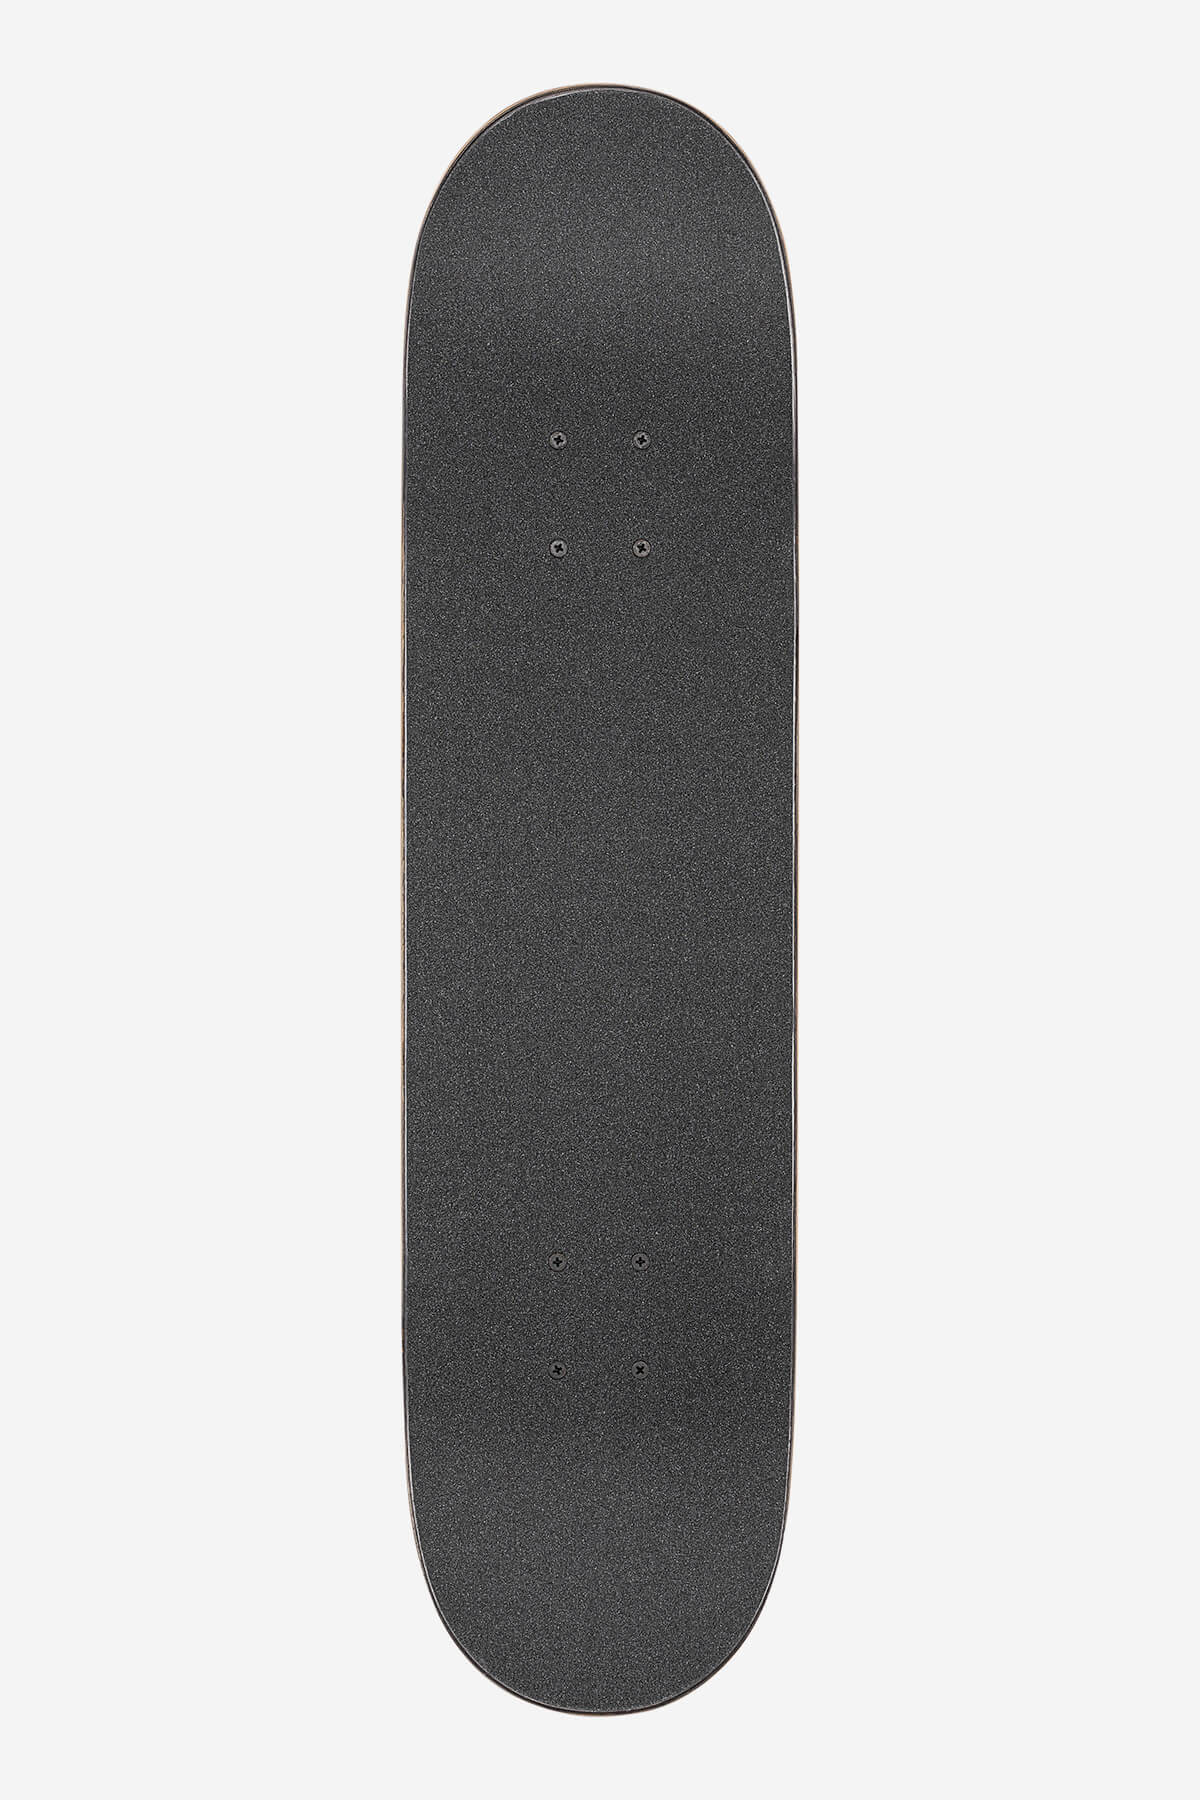 g1 ablaze black dye 8.0" complet skateboard